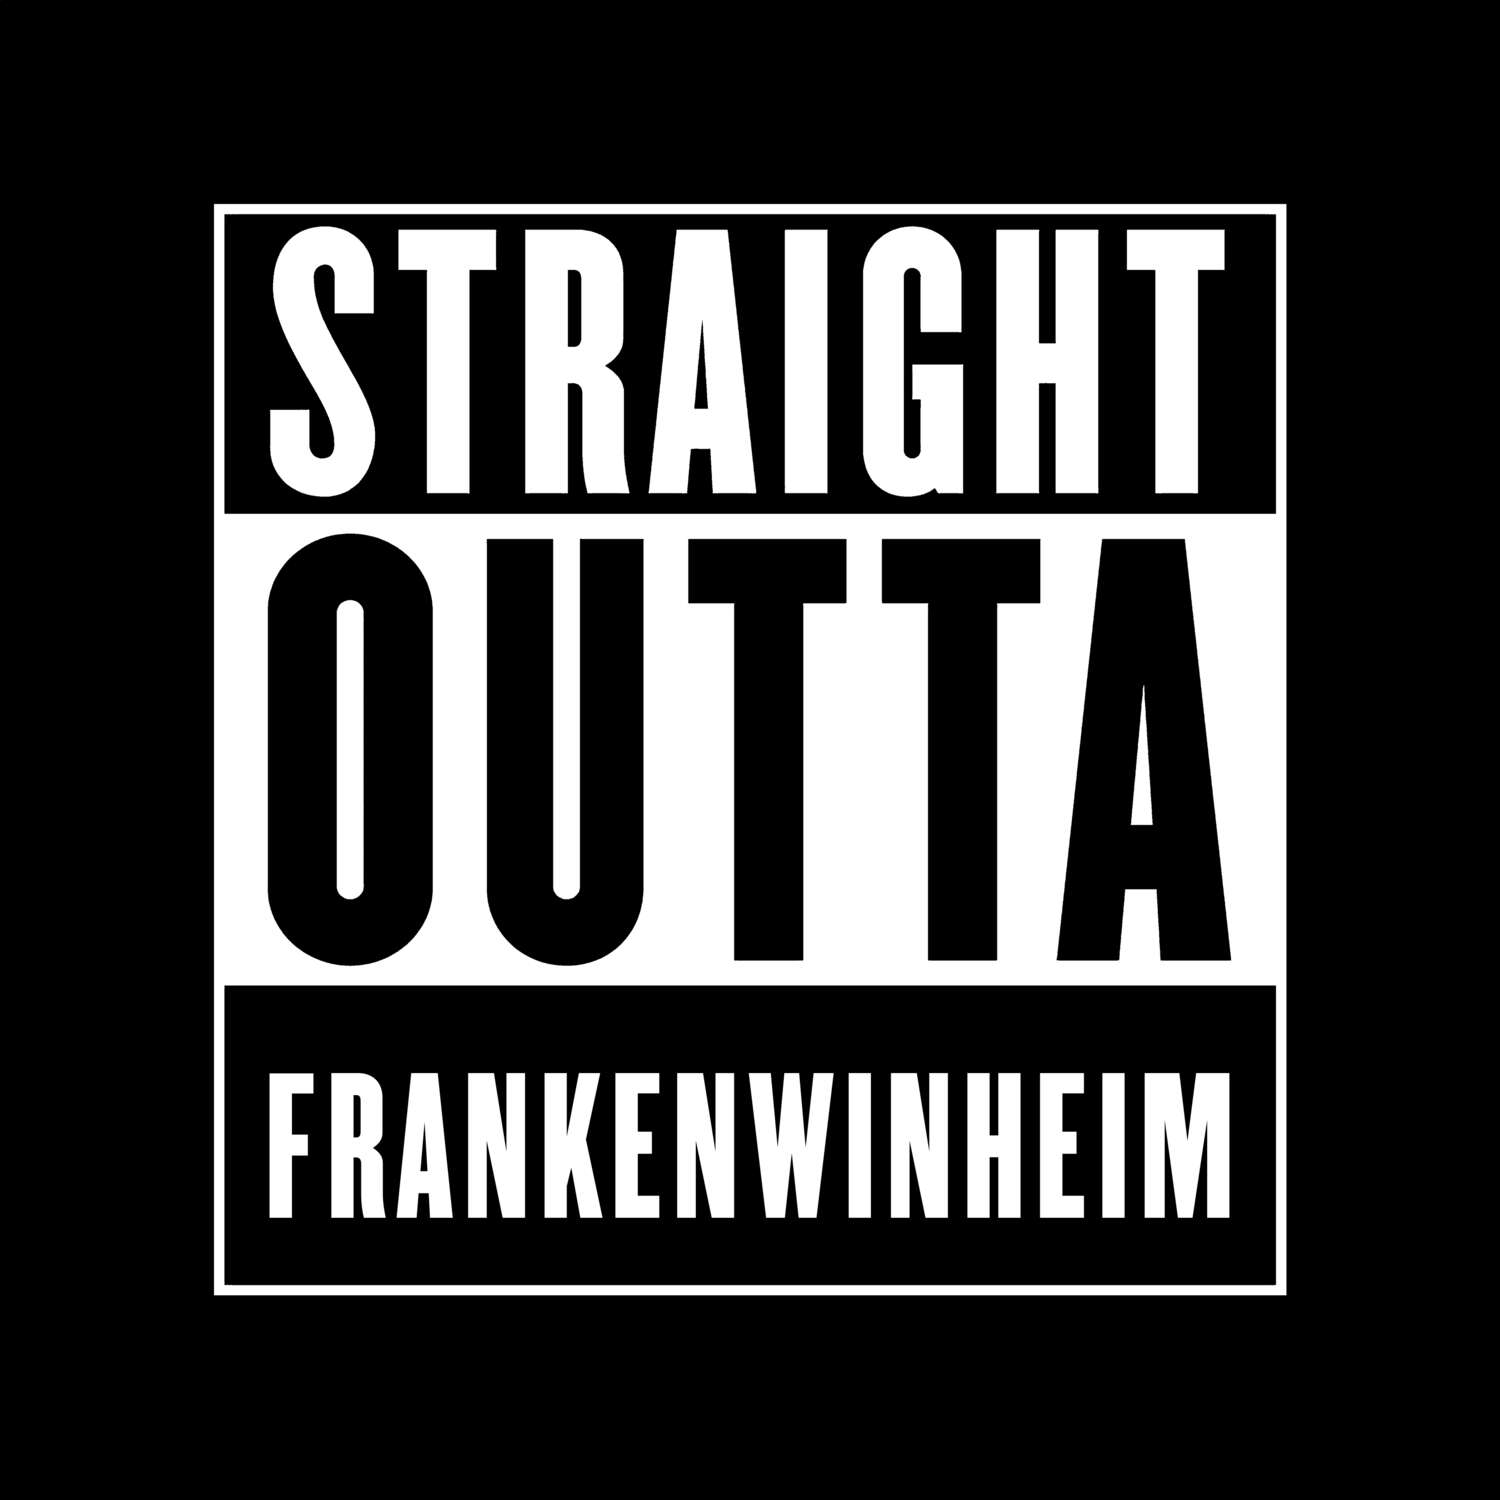 Frankenwinheim T-Shirt »Straight Outta«